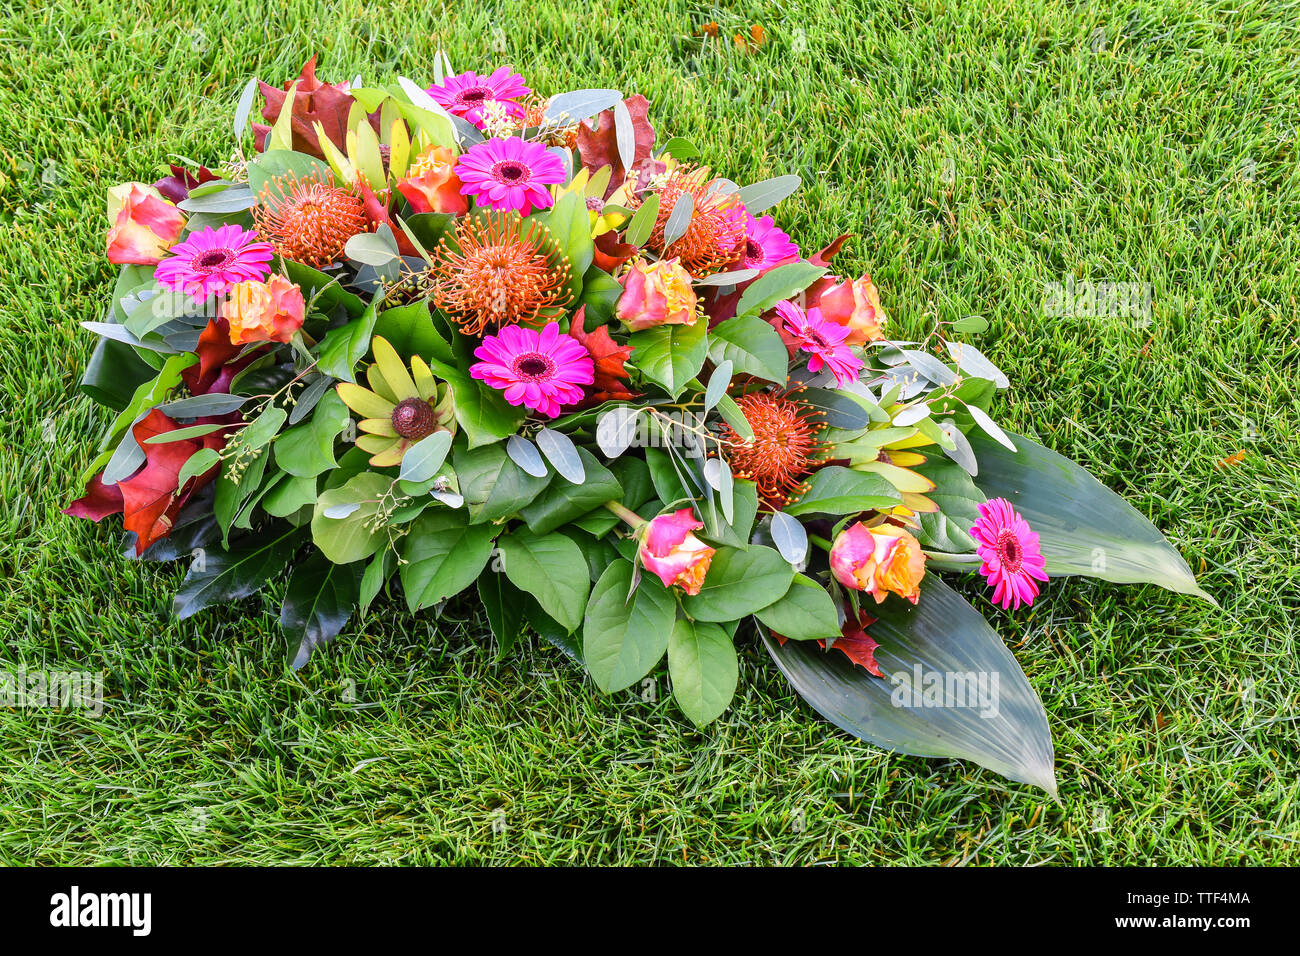 Bunte Blumenarrangement auf grünem Grasfeld. Stockfoto